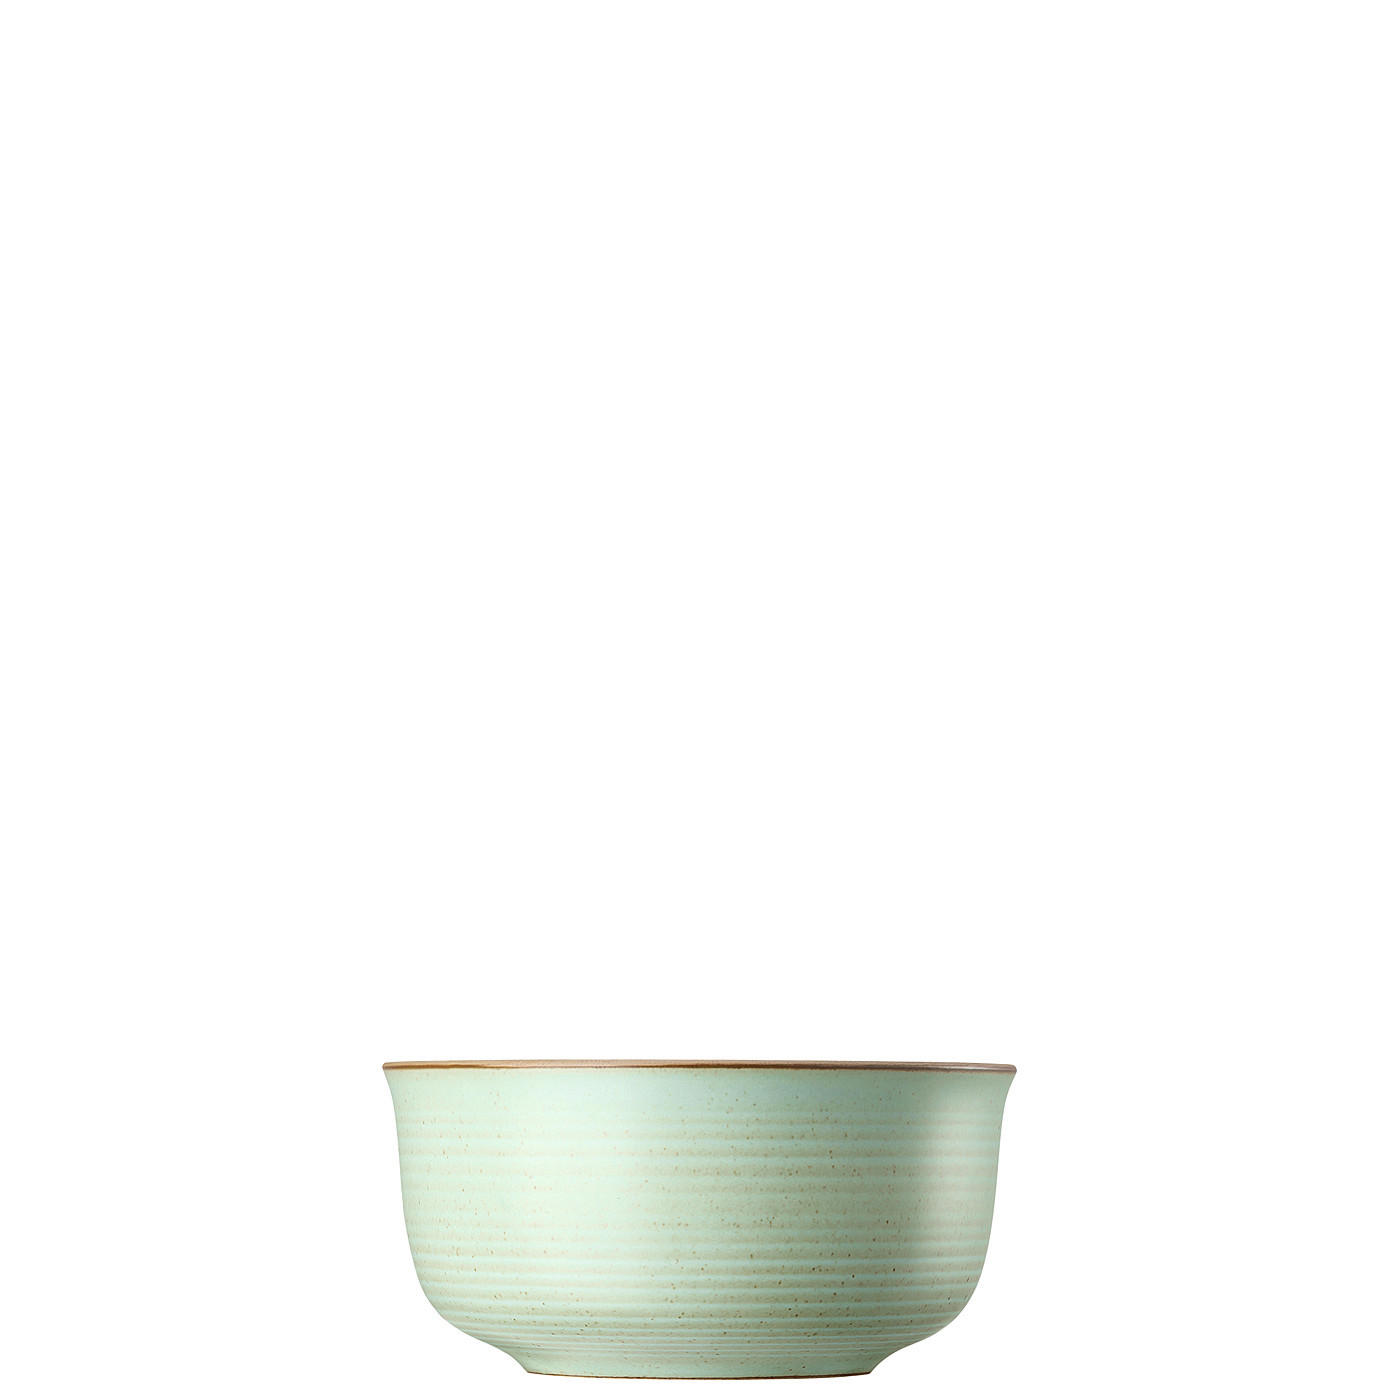 MÜSLISCHALE  - Mintgrün, Design, Keramik (15,4/15,4/7,4cm) - Thomas